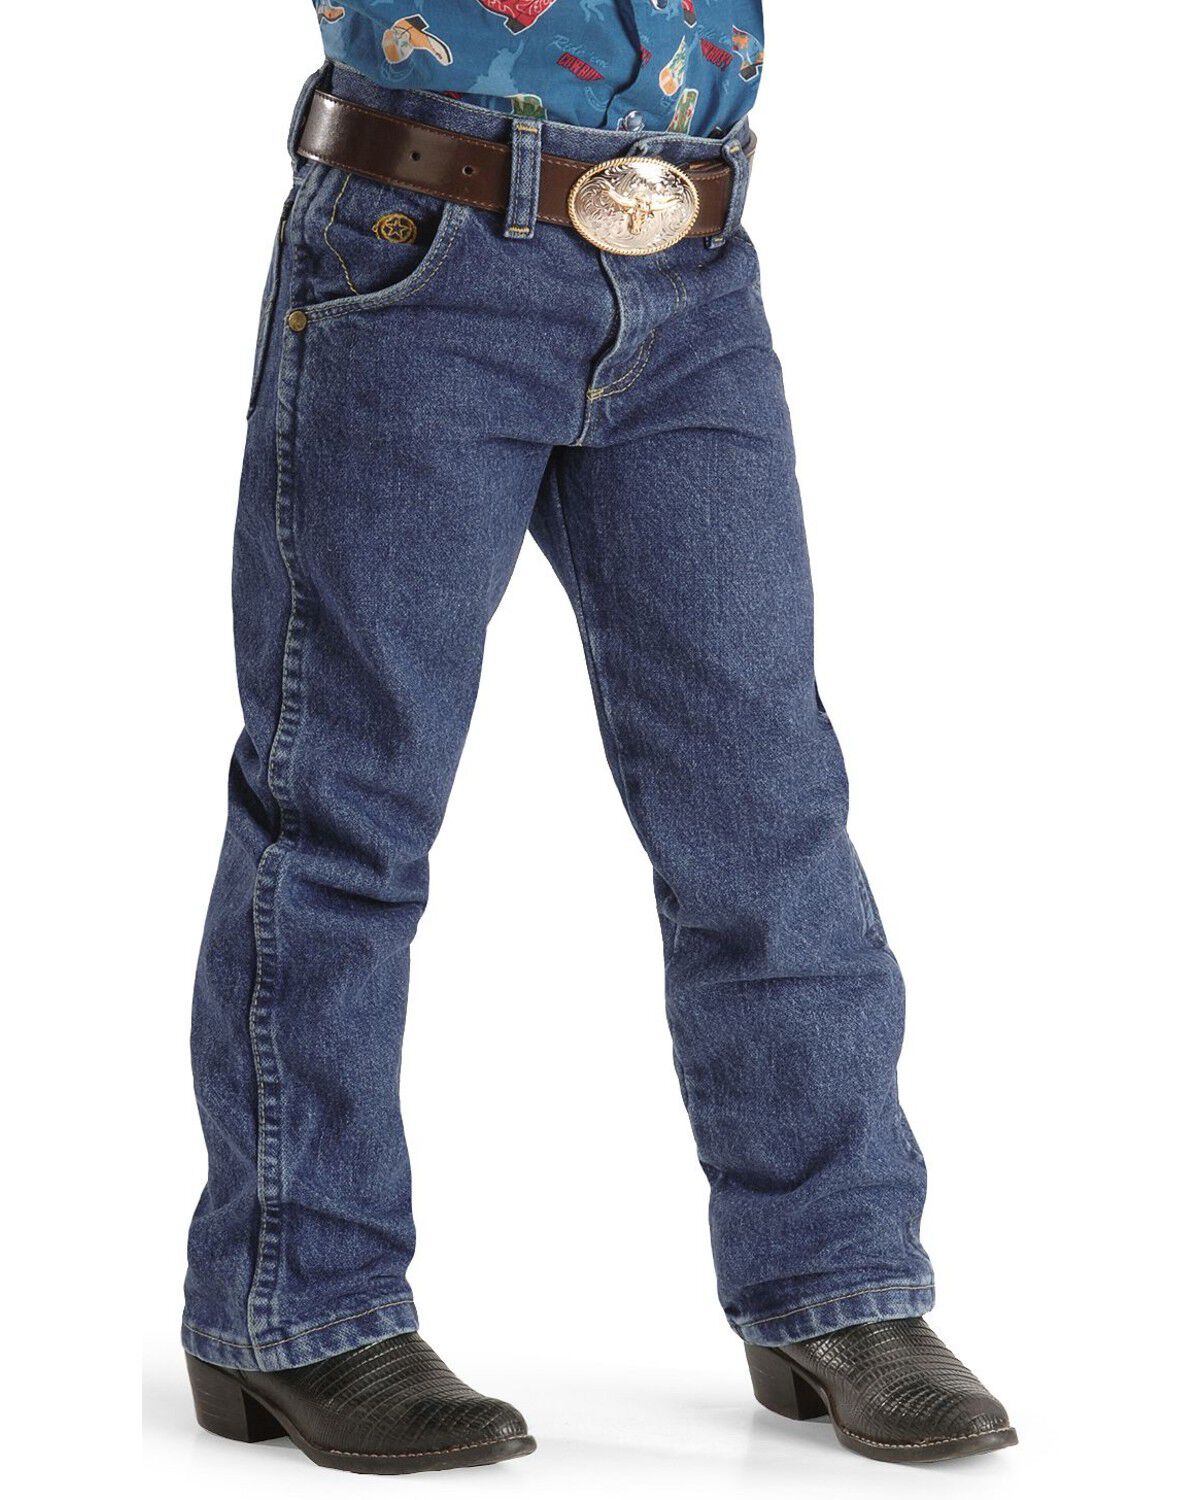 george strait wrangler jeans